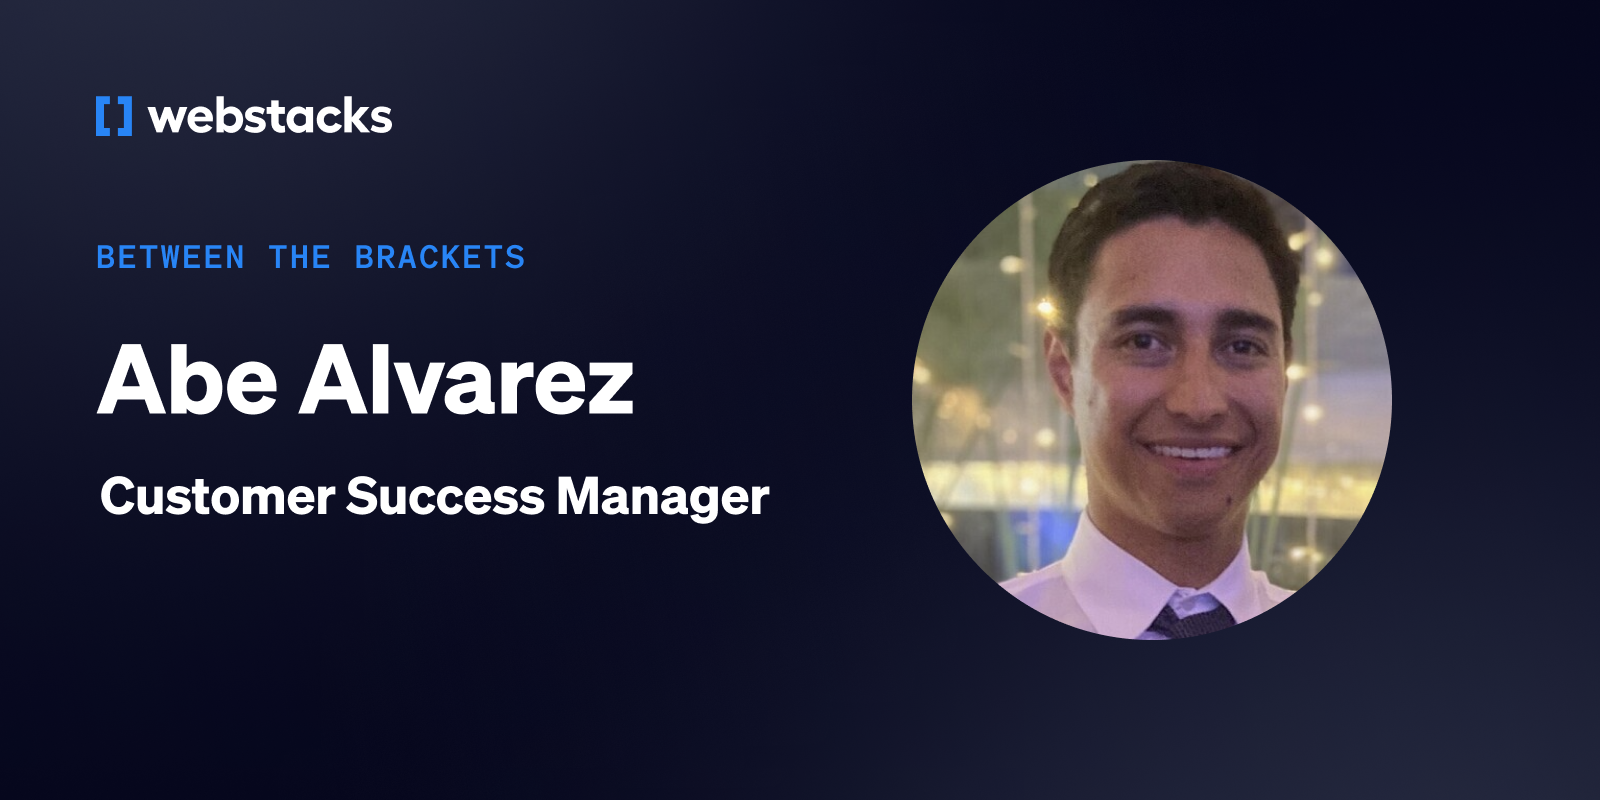 Between the Brackets: Abe Alvarez, Customer Success Manager